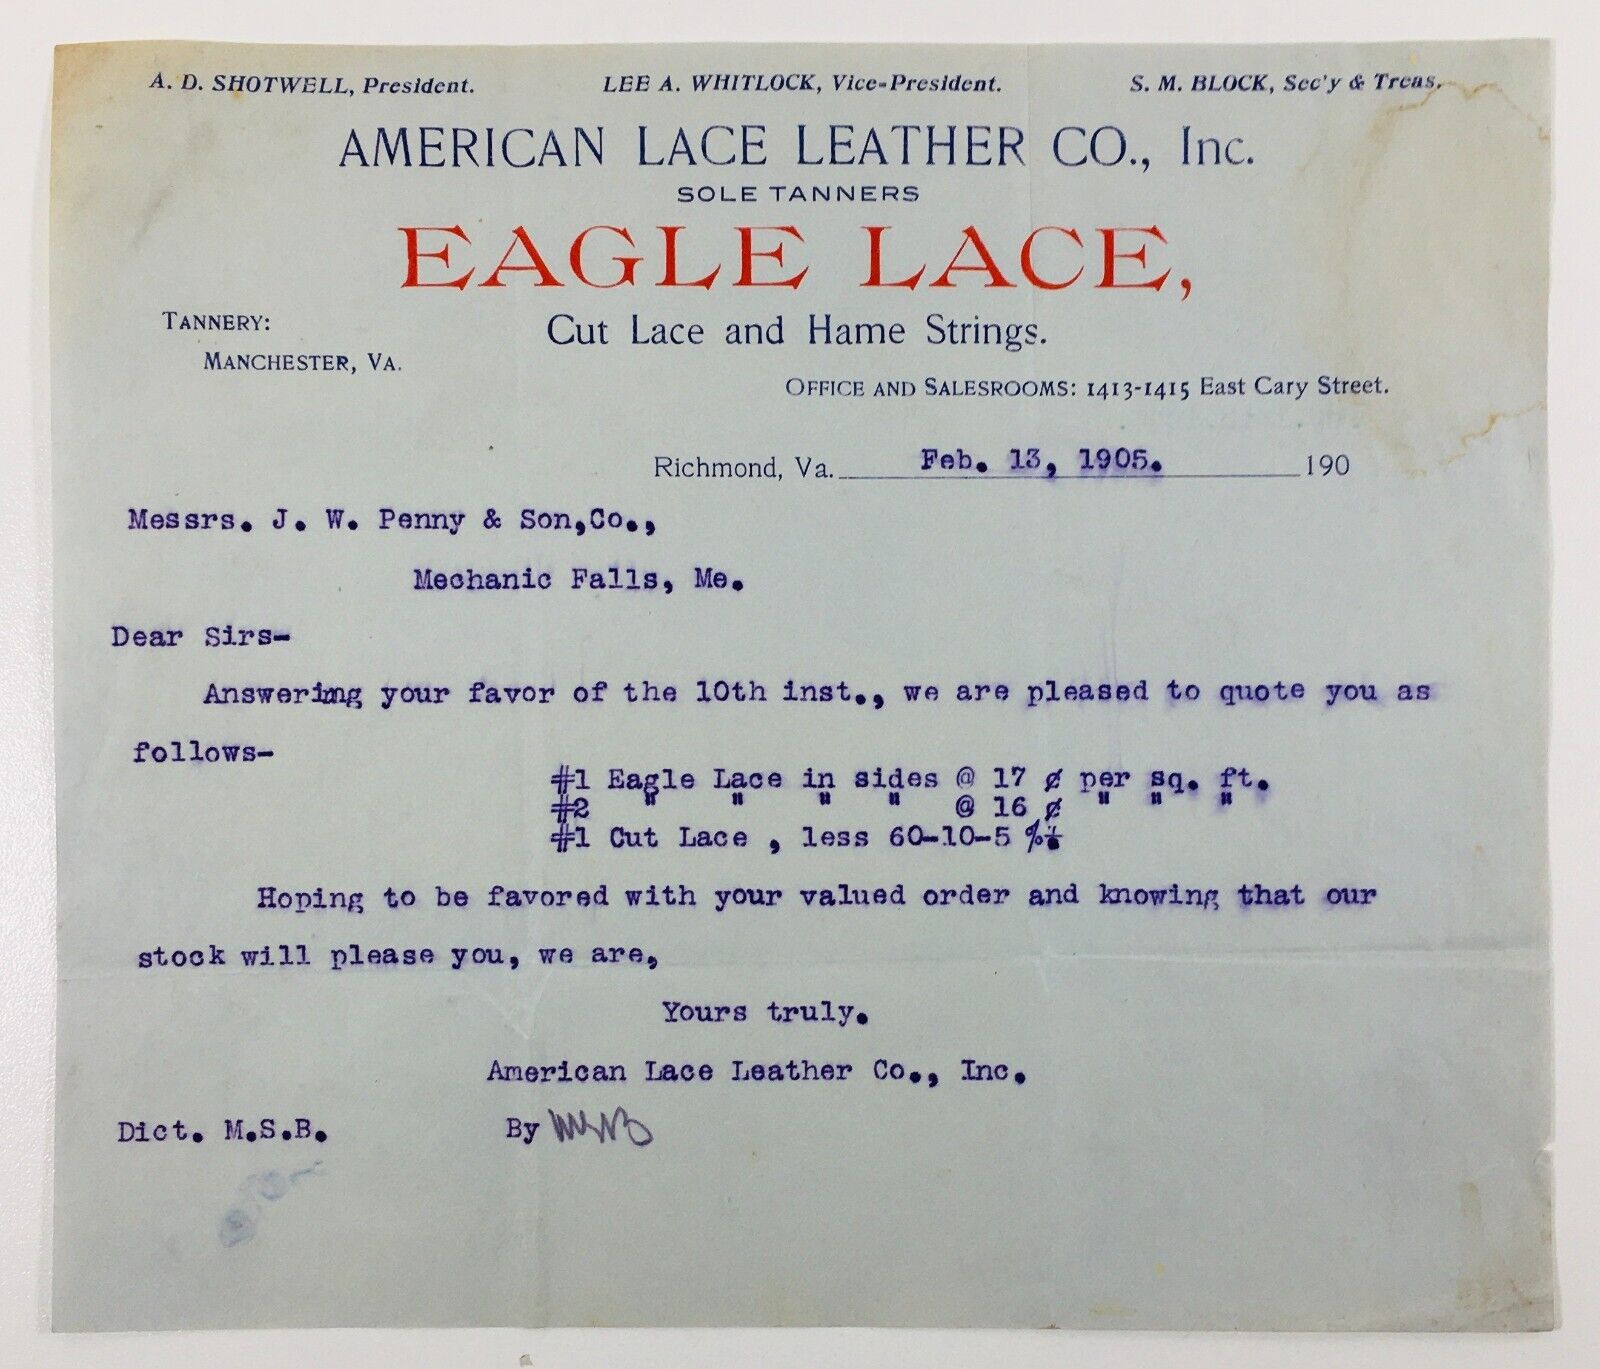 1905 Letterhead American Lace Leather Company